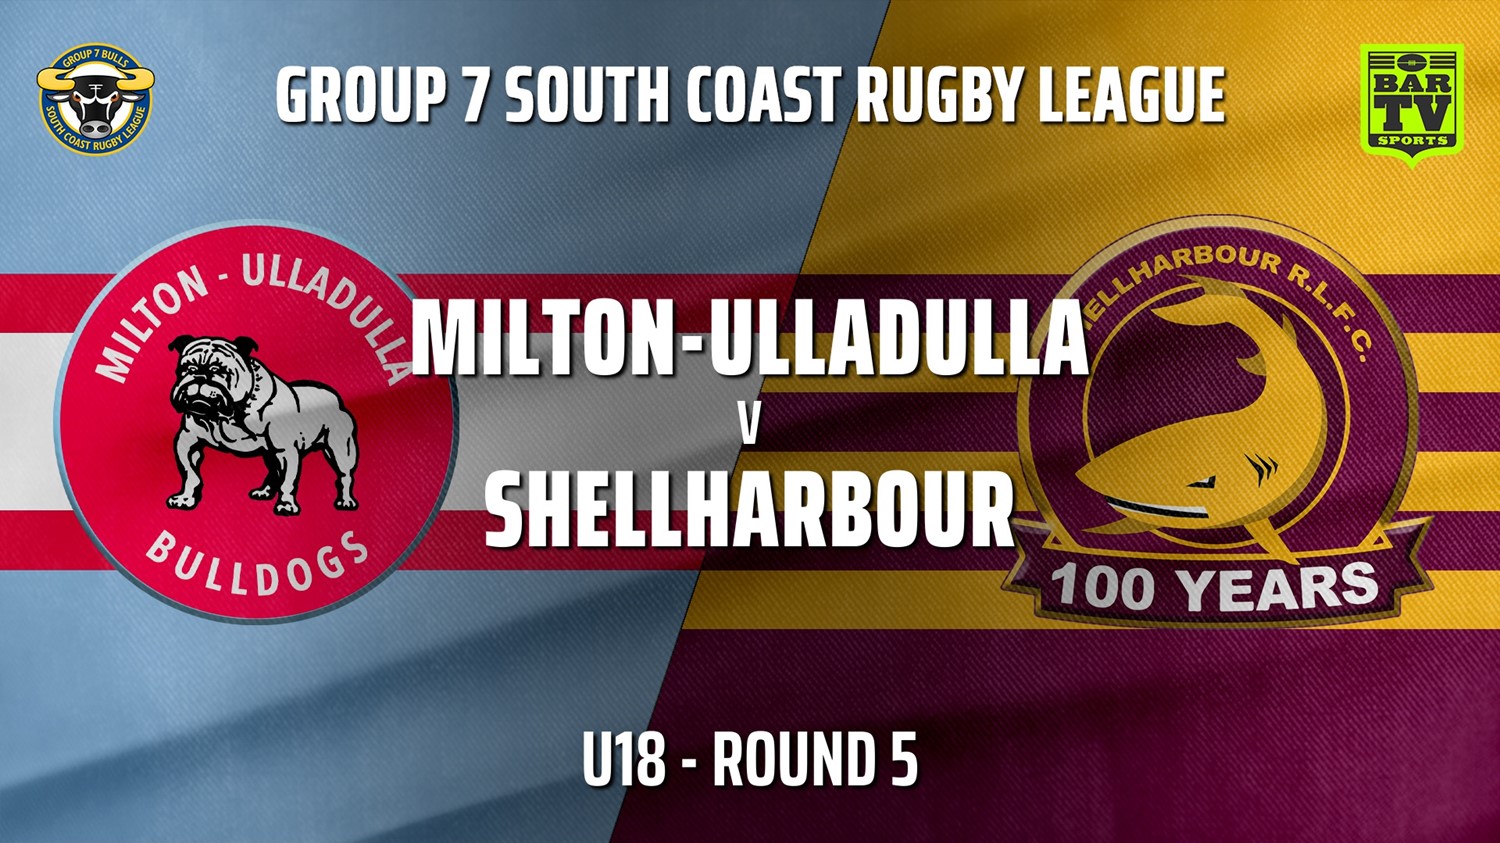 210516-Group 7 RL Round 5 - U18 - Milton-Ulladulla Bulldogs v Shellharbour Sharks Slate Image